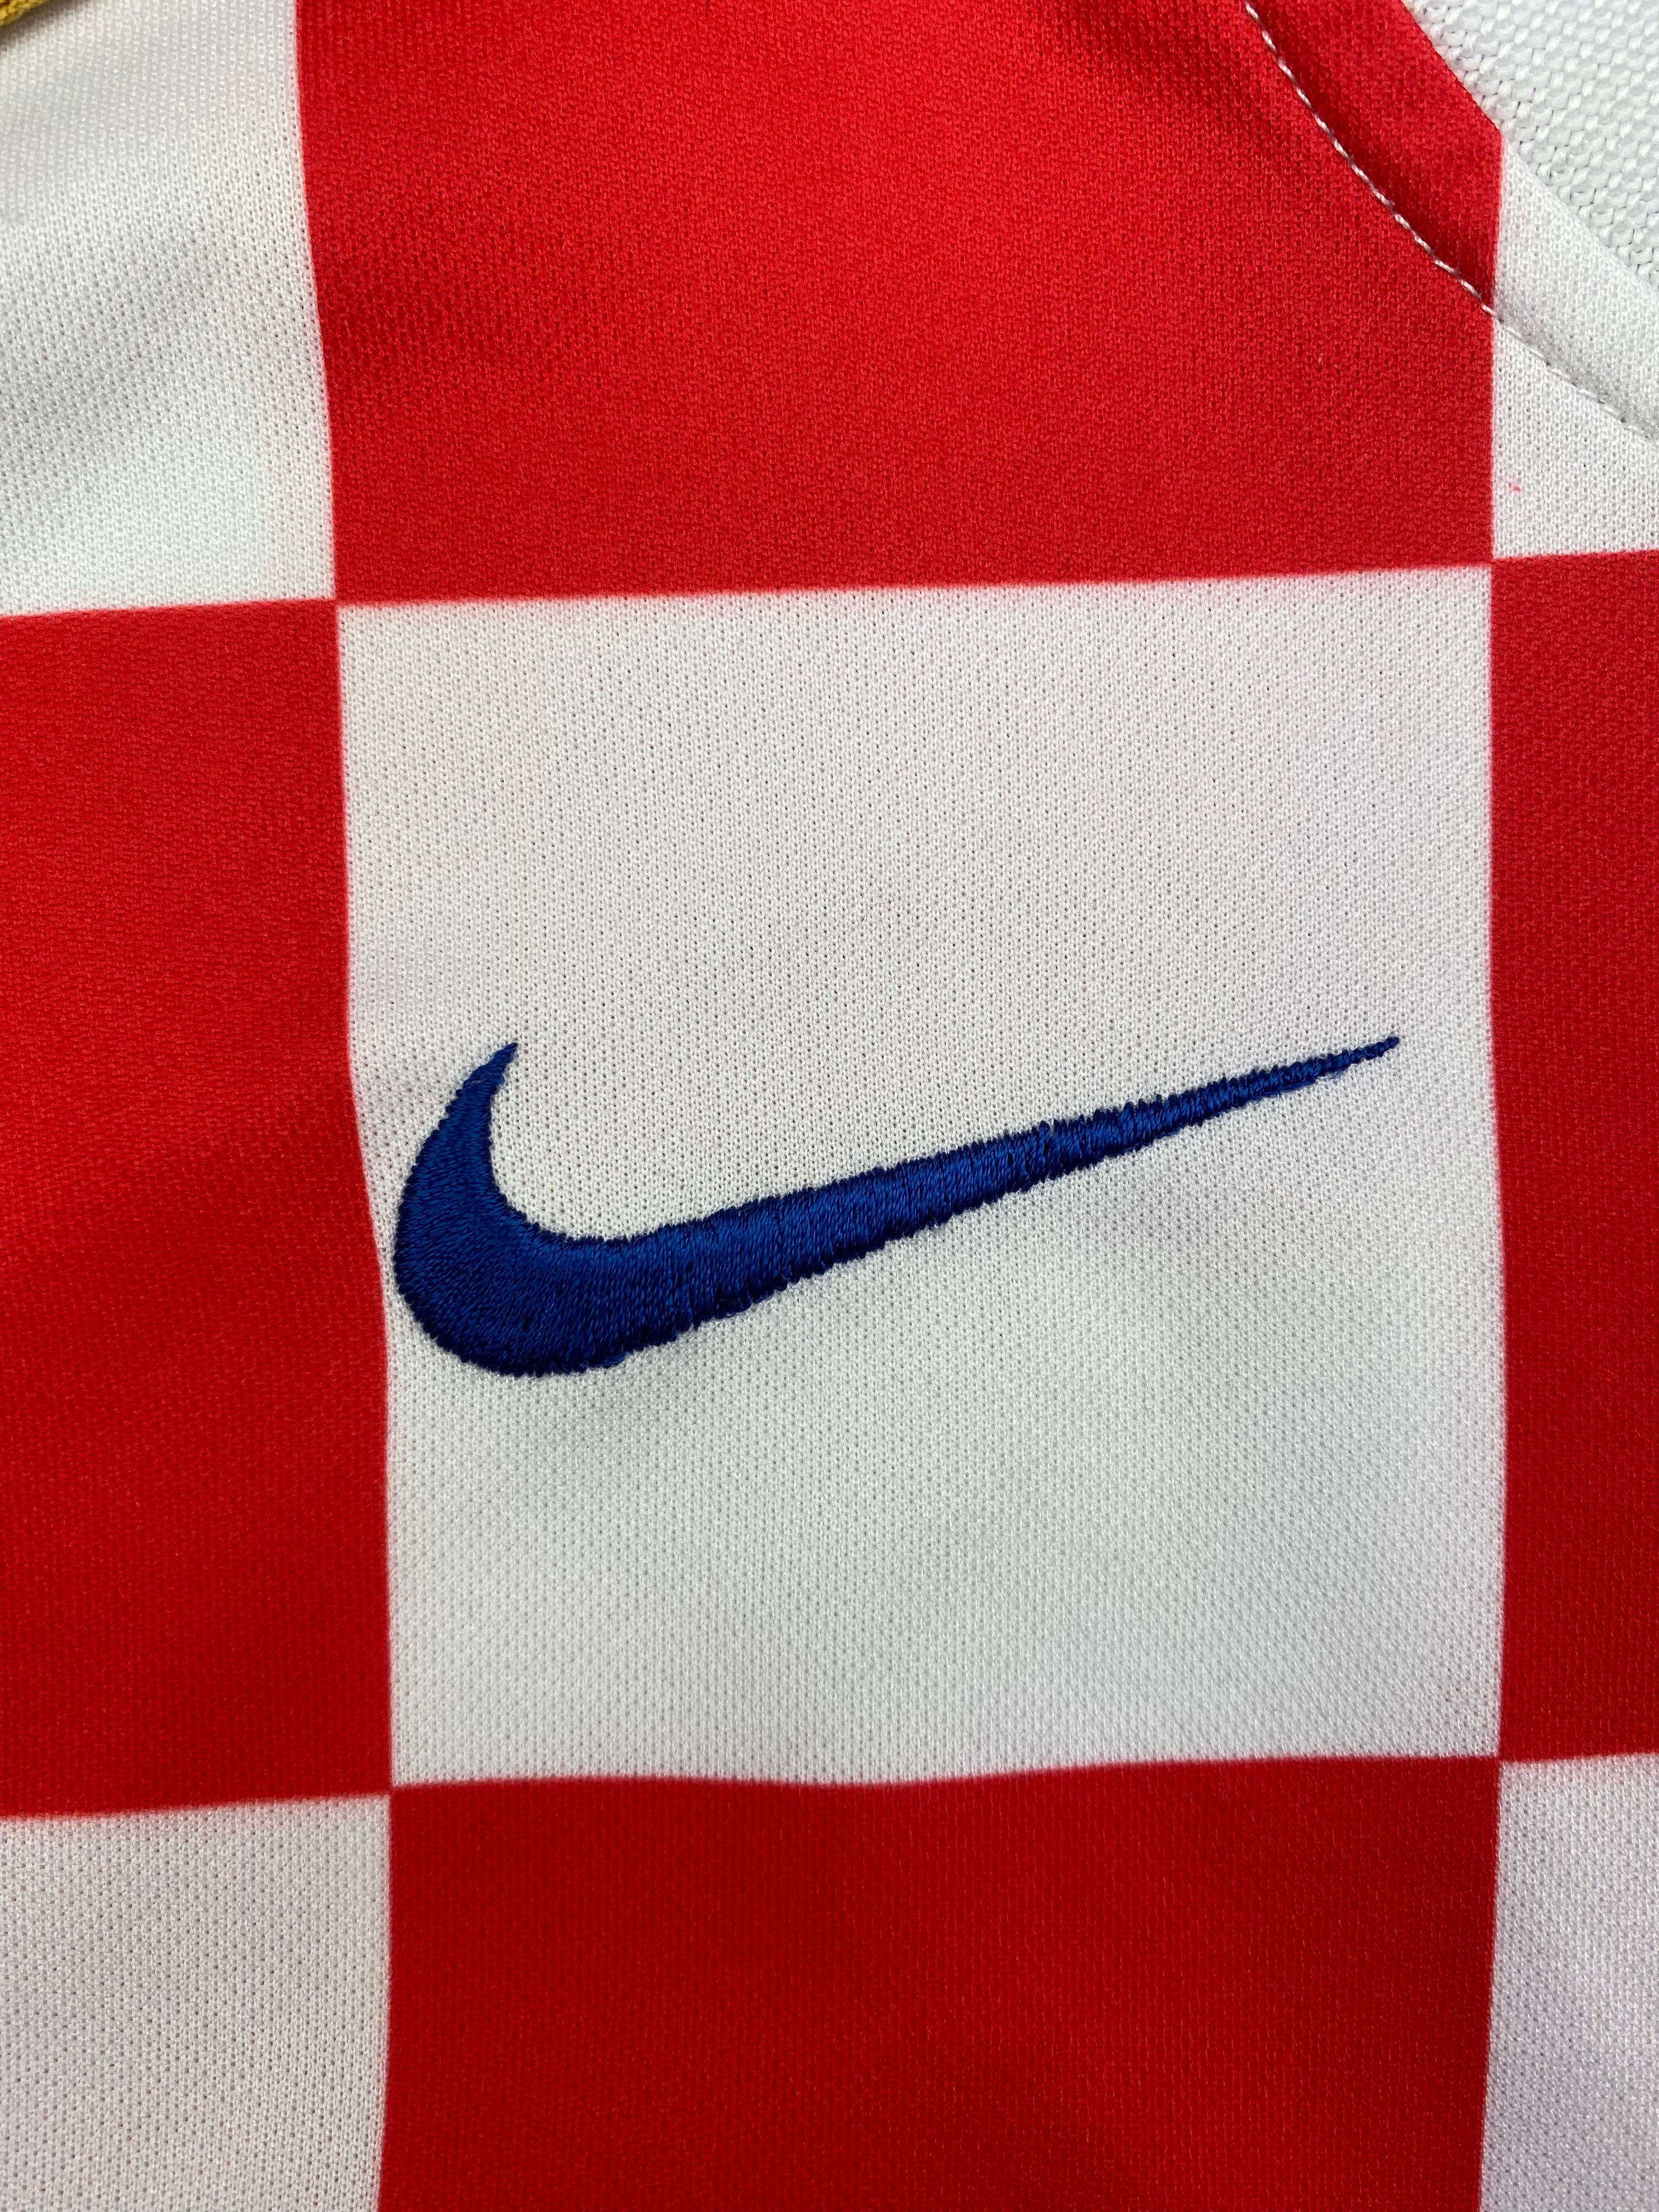 2004/06 Croatia Basic Home Shirt (M) 9/10